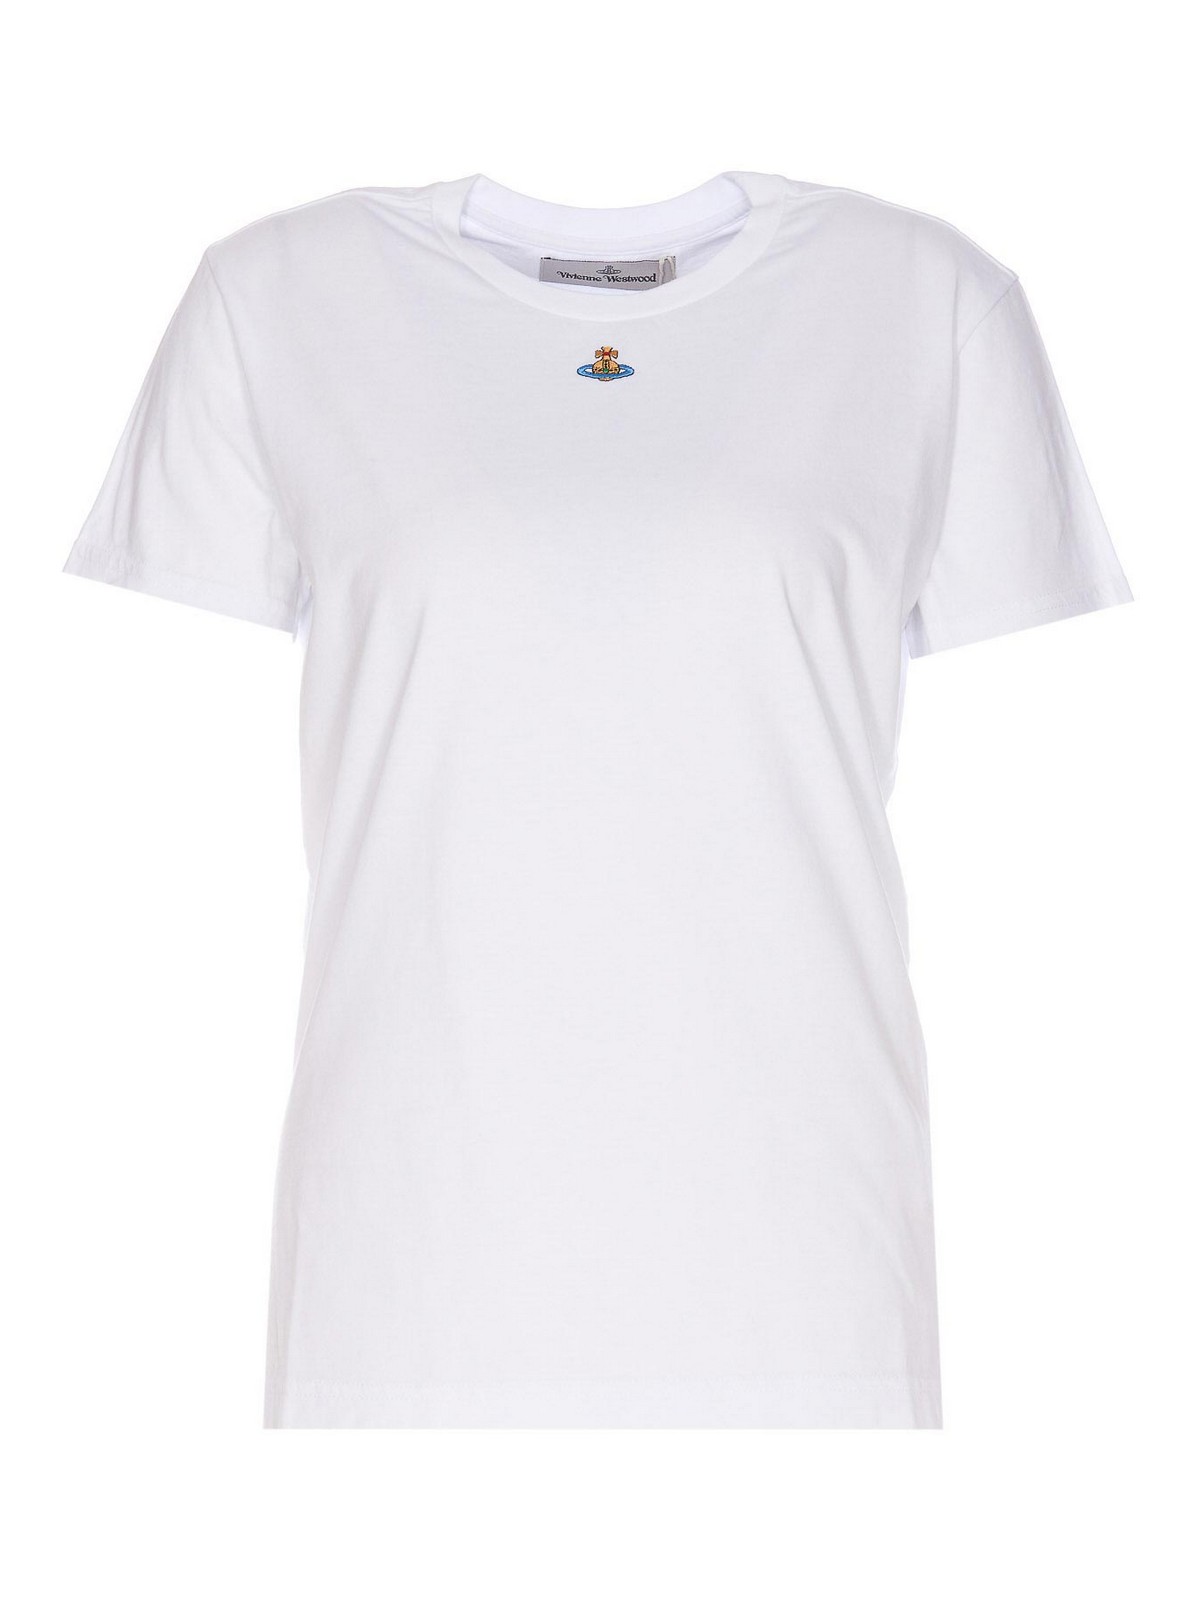 Vivienne Westwood White T-shirt Orb Logo